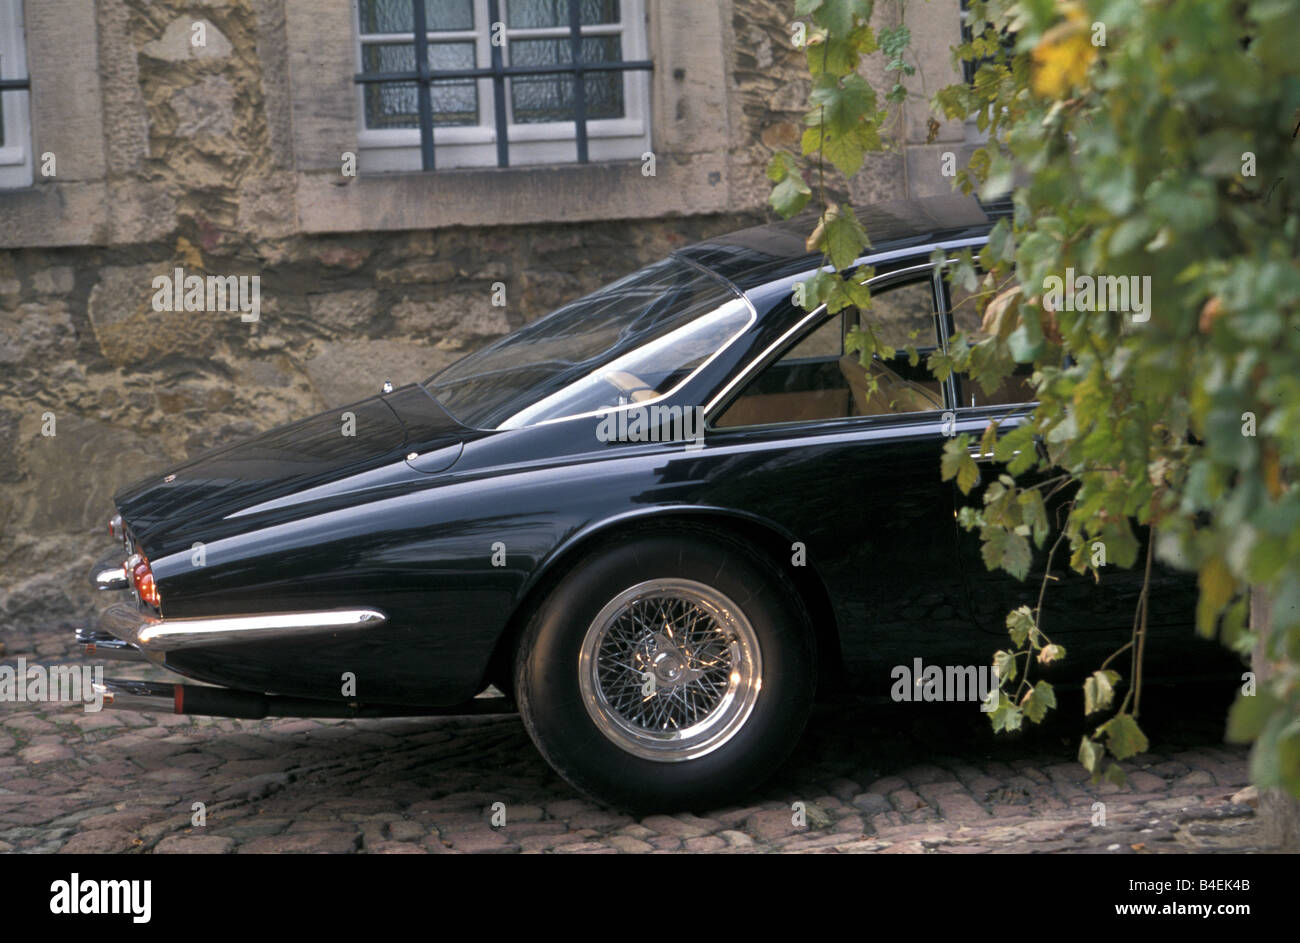 Car, Ferrari 500 Superfast, model year 1964, black, Coupé, Coupe, vintage car, 1960s, sixties,  standing, side view, landscape, Stock Photo